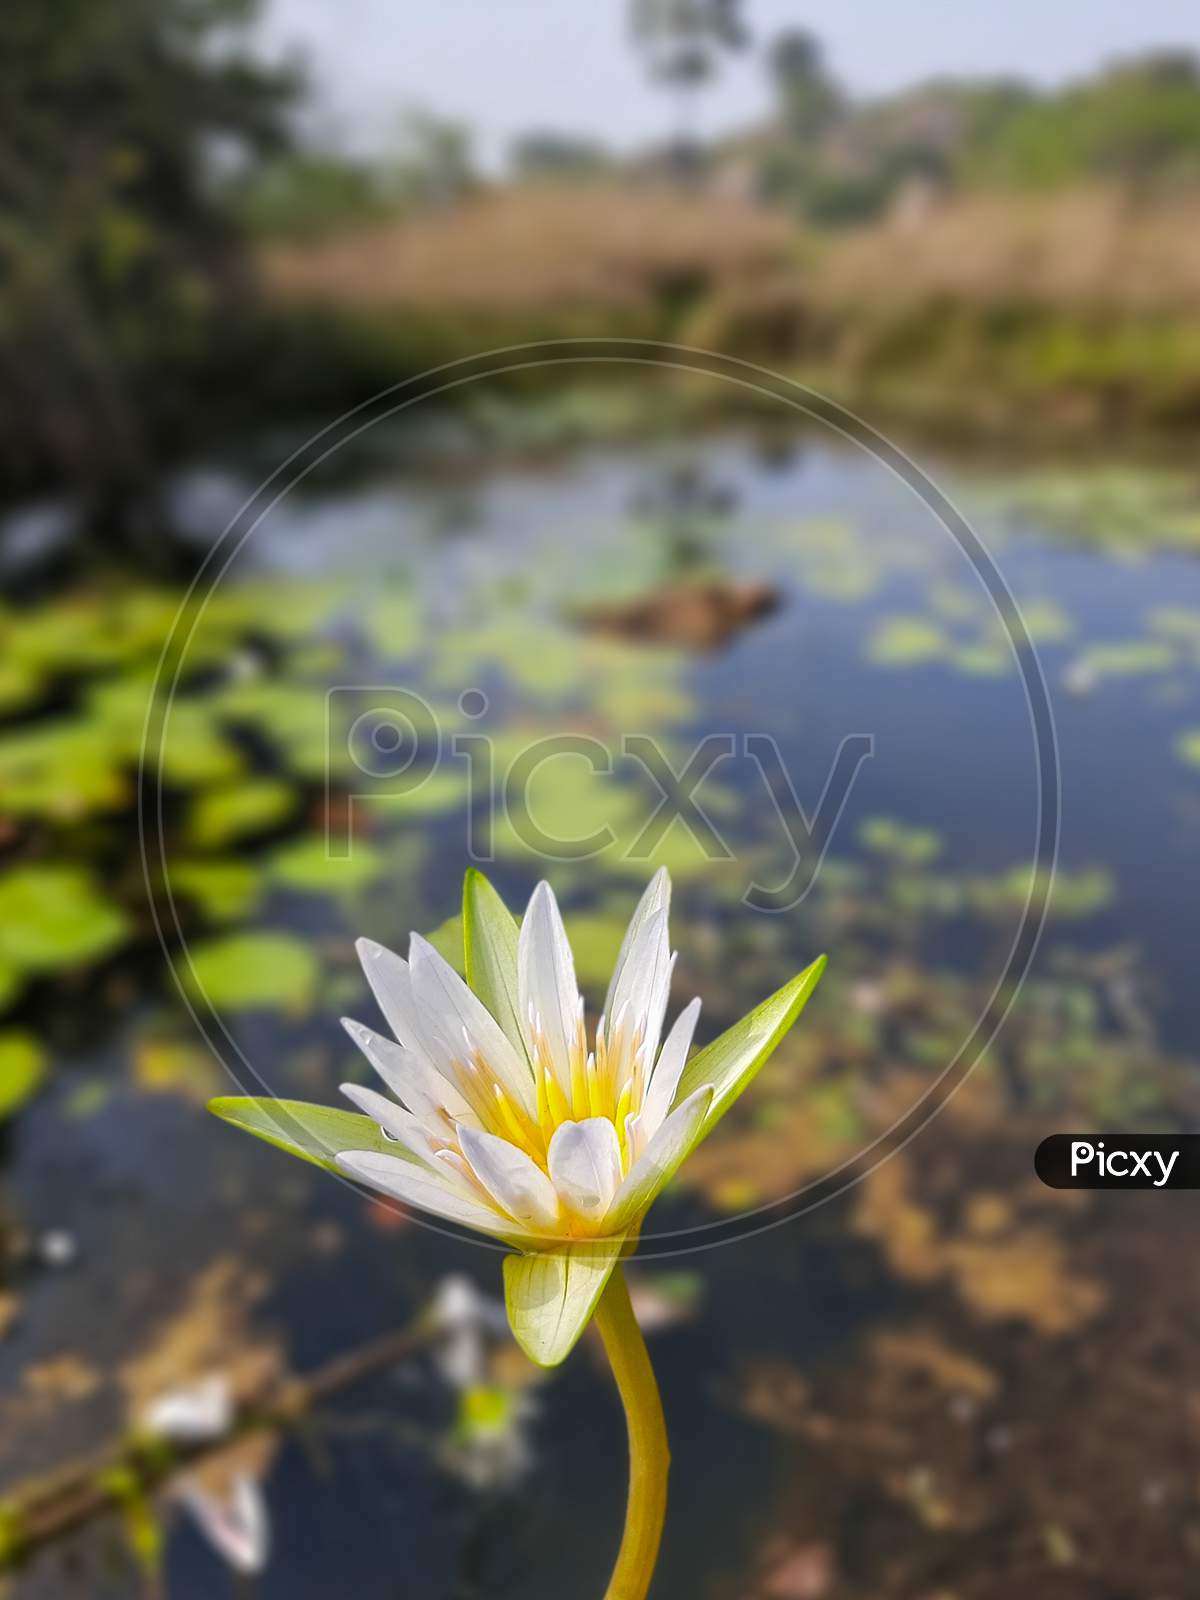 White Lotus Flower Blooming in Pond